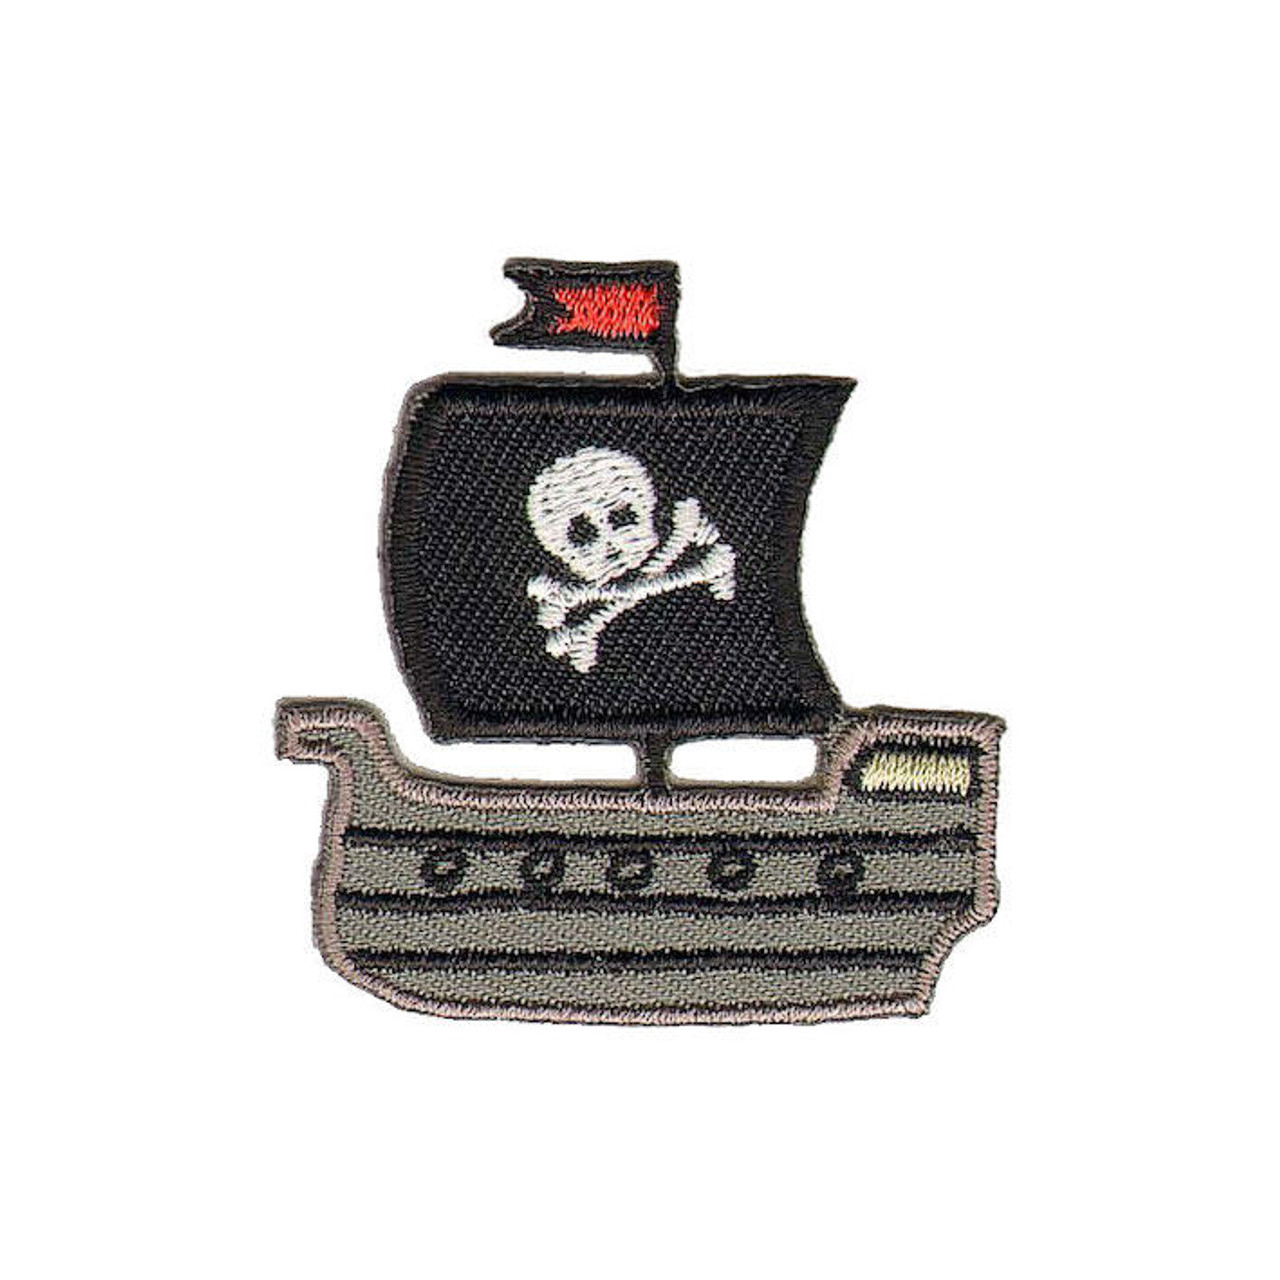 Pirate Ship Iron-on Sew-on Applique Motif